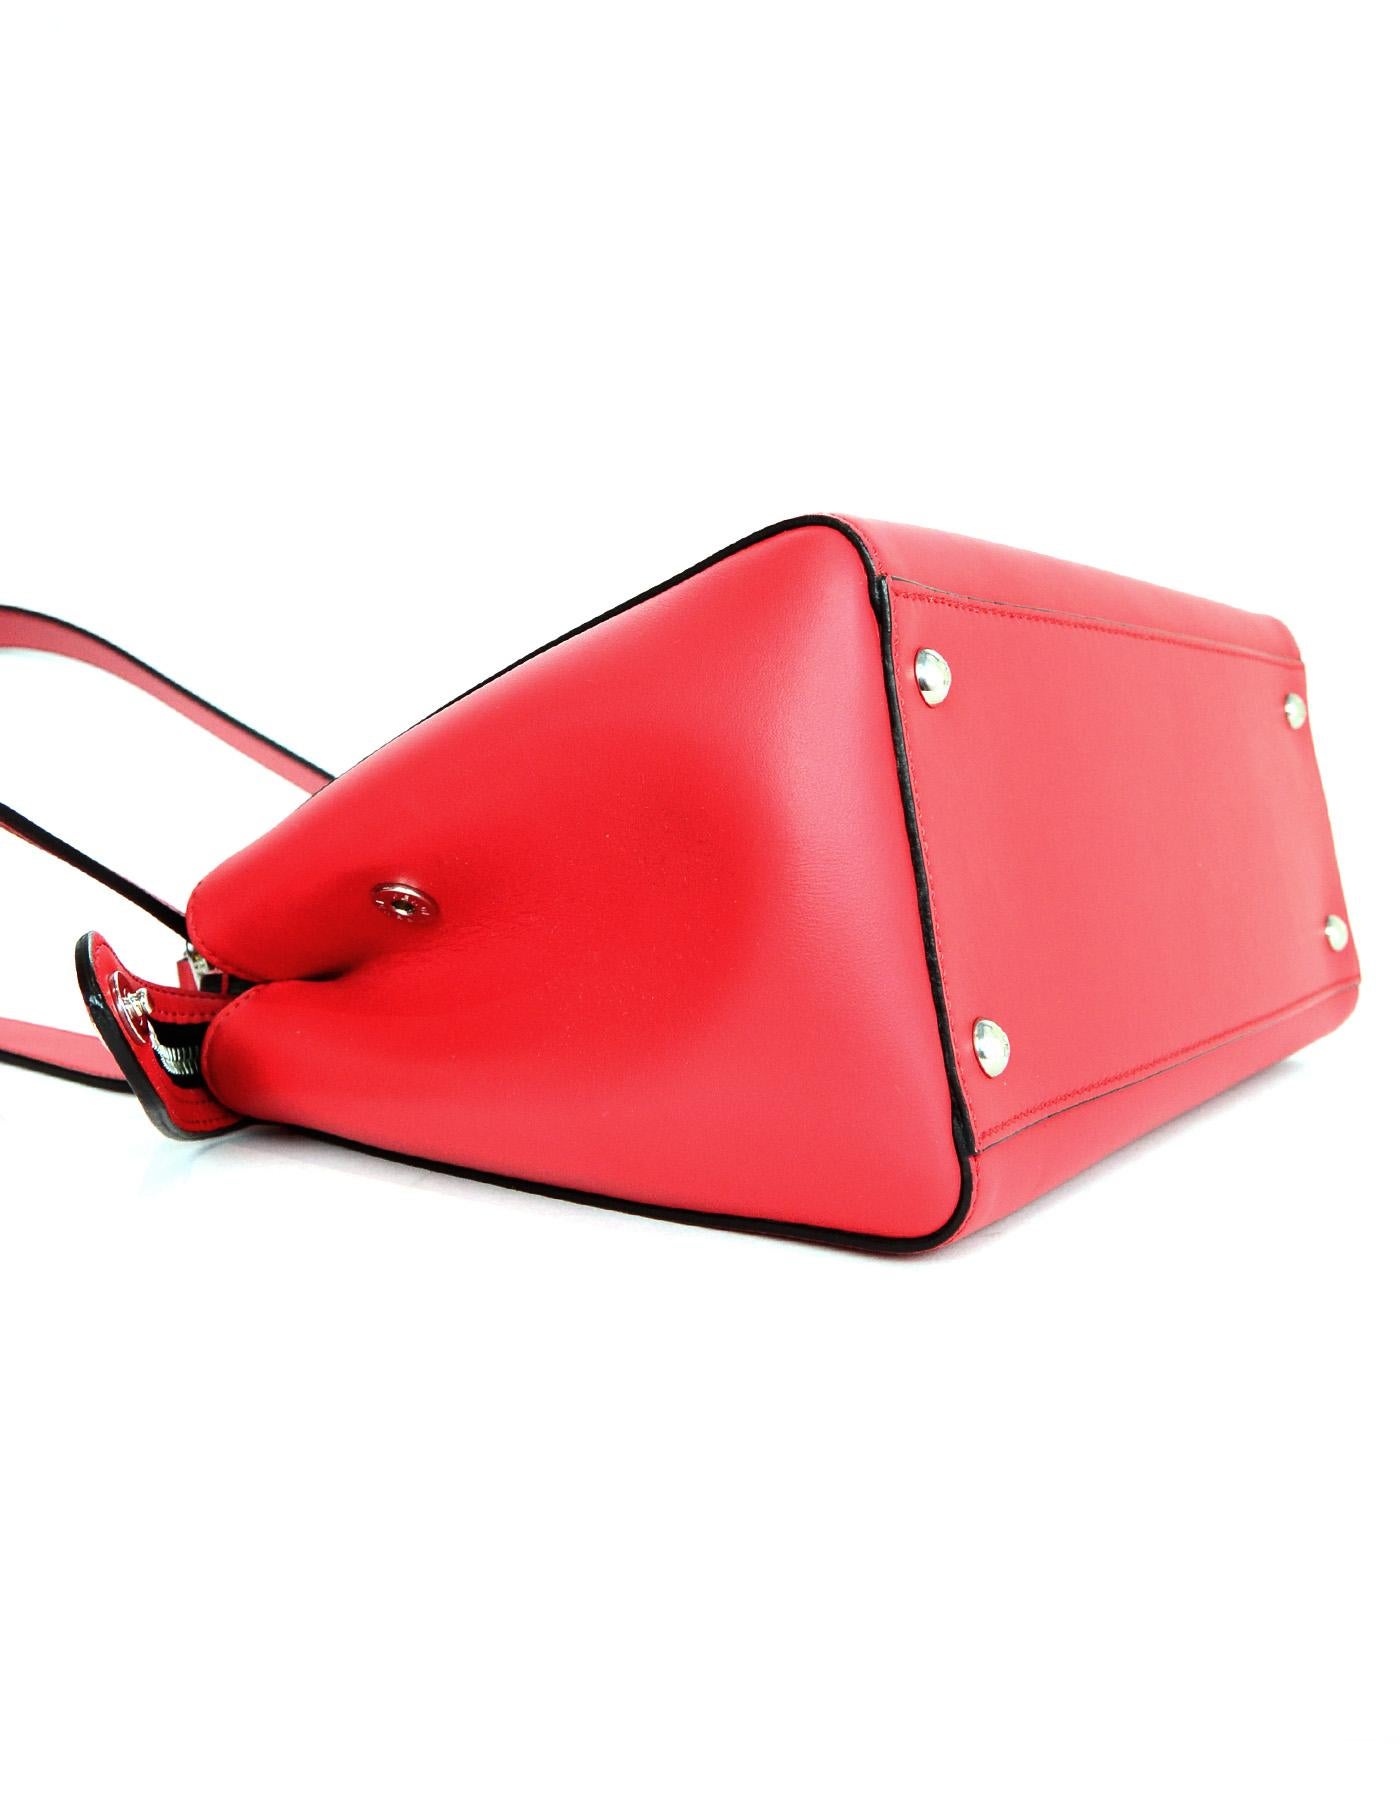 Fendi Red Nappa Leather Whipstitch Fashion Show Dotcom Satchel Bag w/ Strap 2